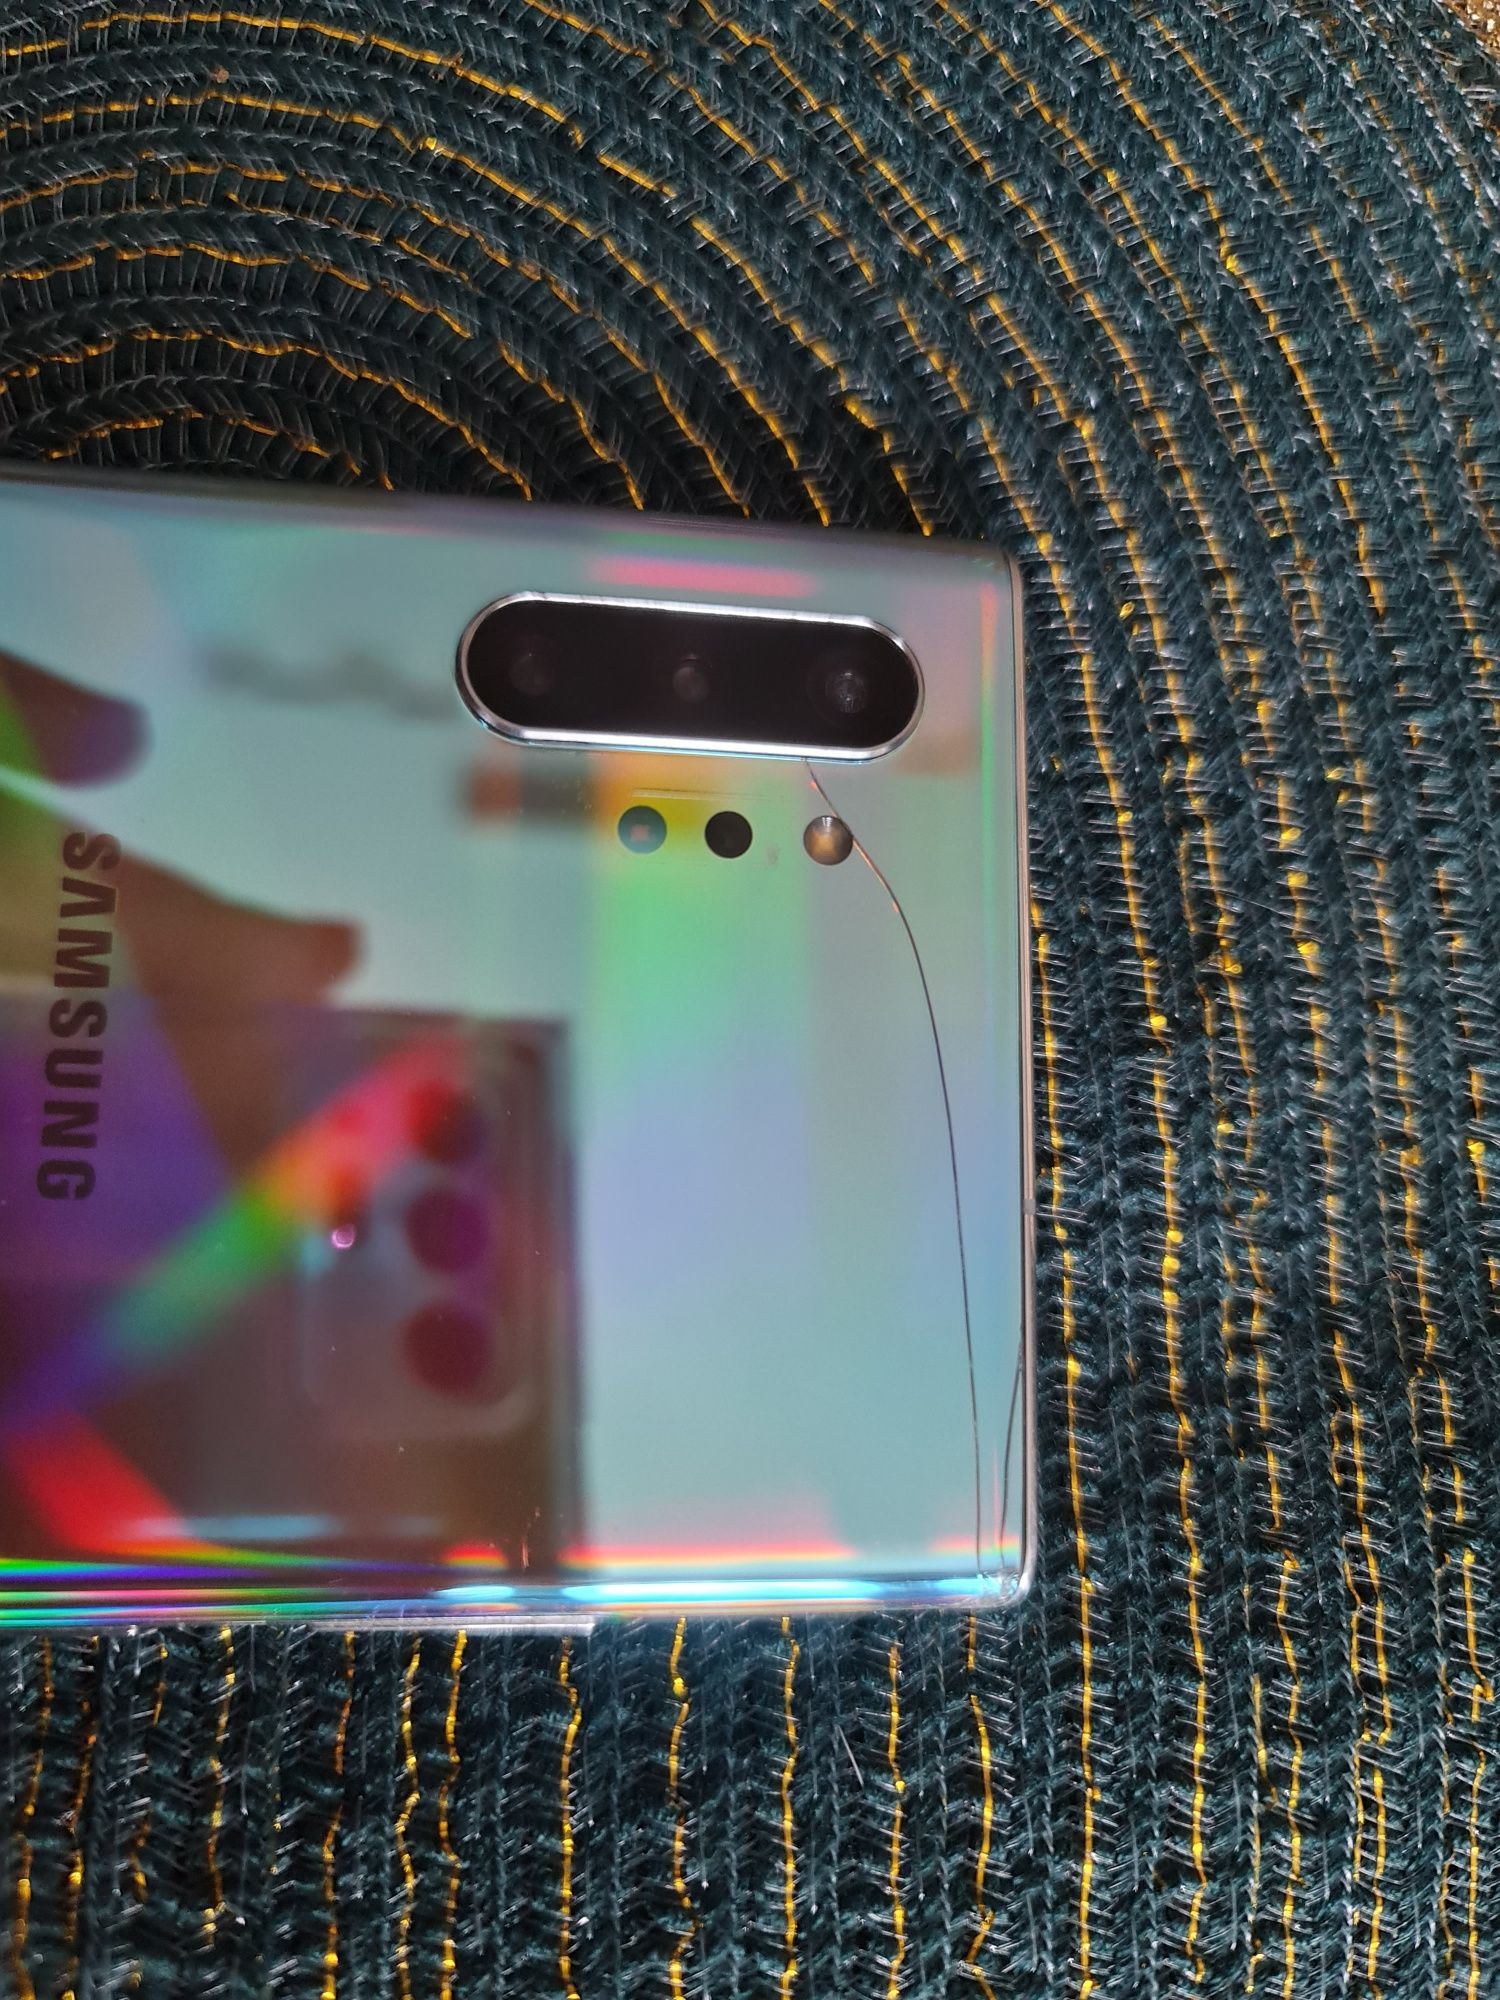 Samsung Galaxy Note 10+ Plus Aura Glowa 256BG